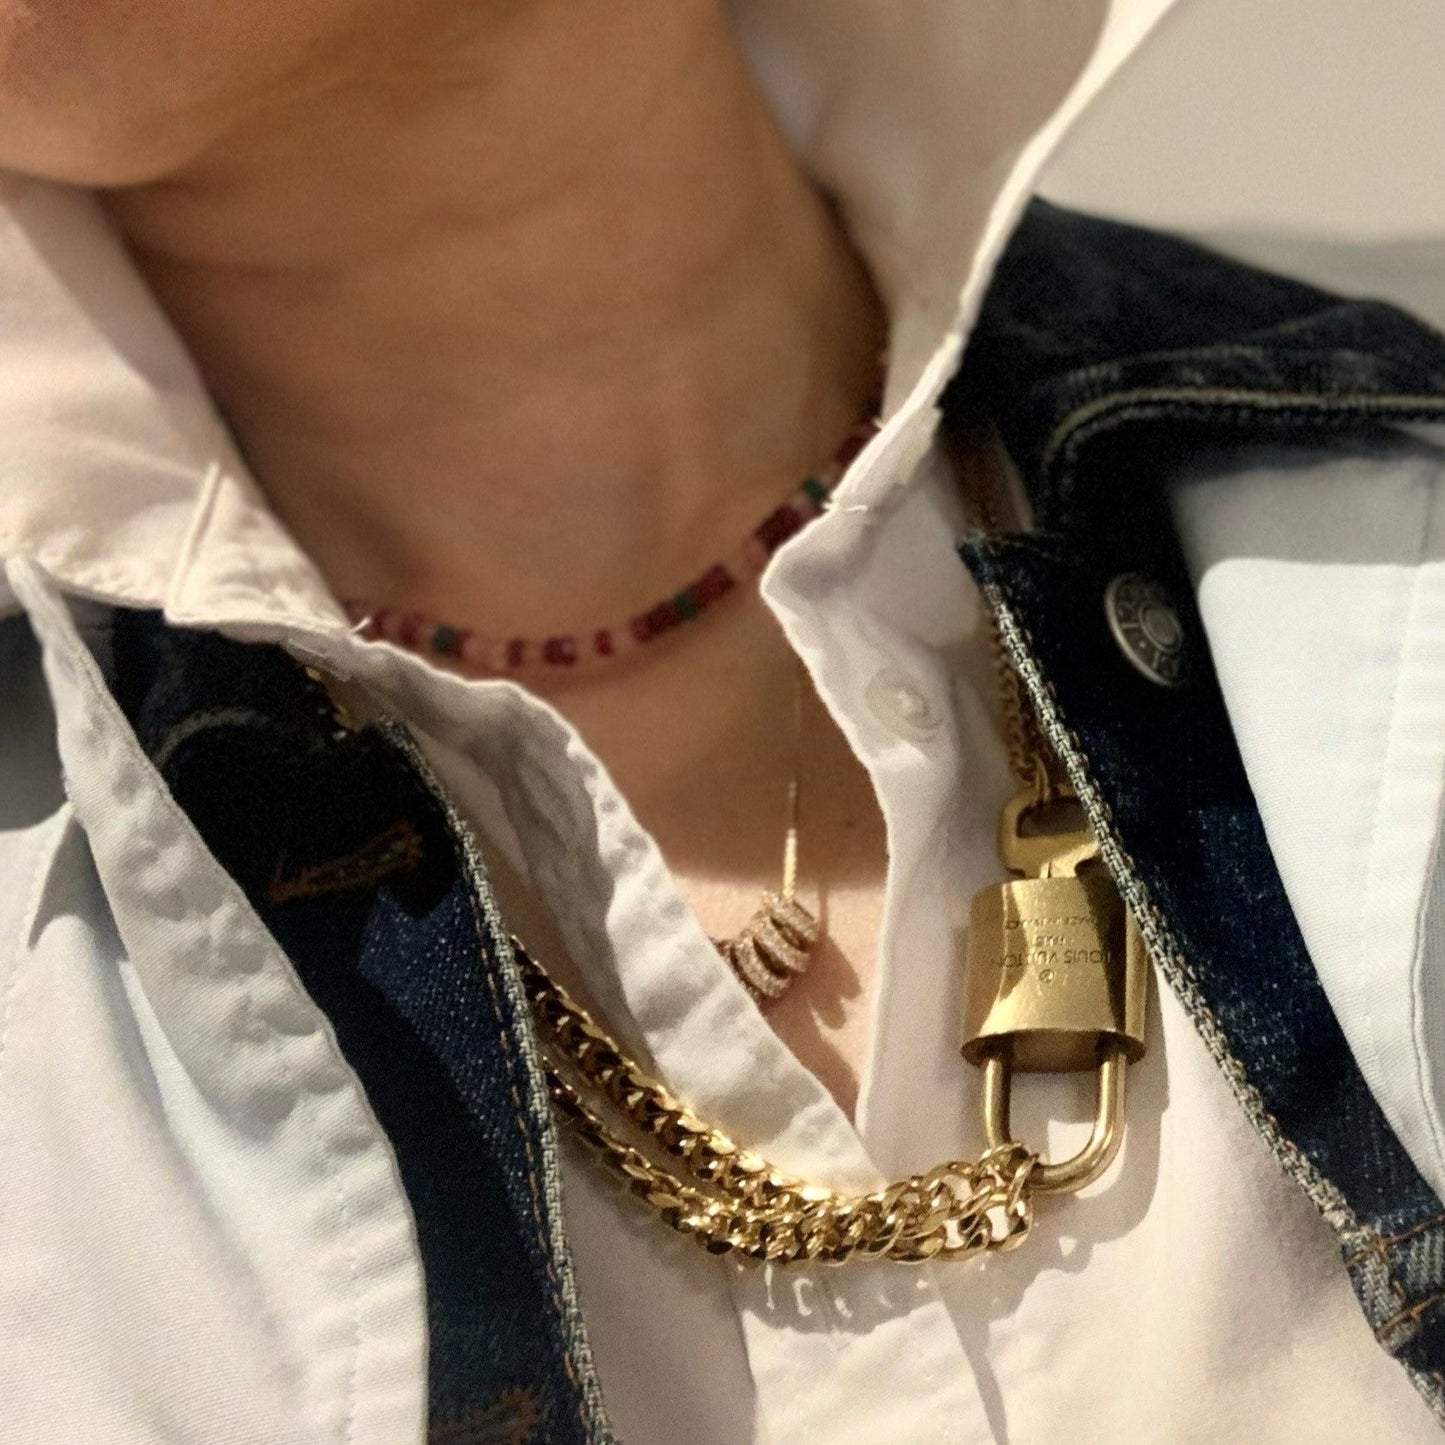 Louis Vuitton - Authentic Brass Padlock Necklace | Fomo 22 Chain